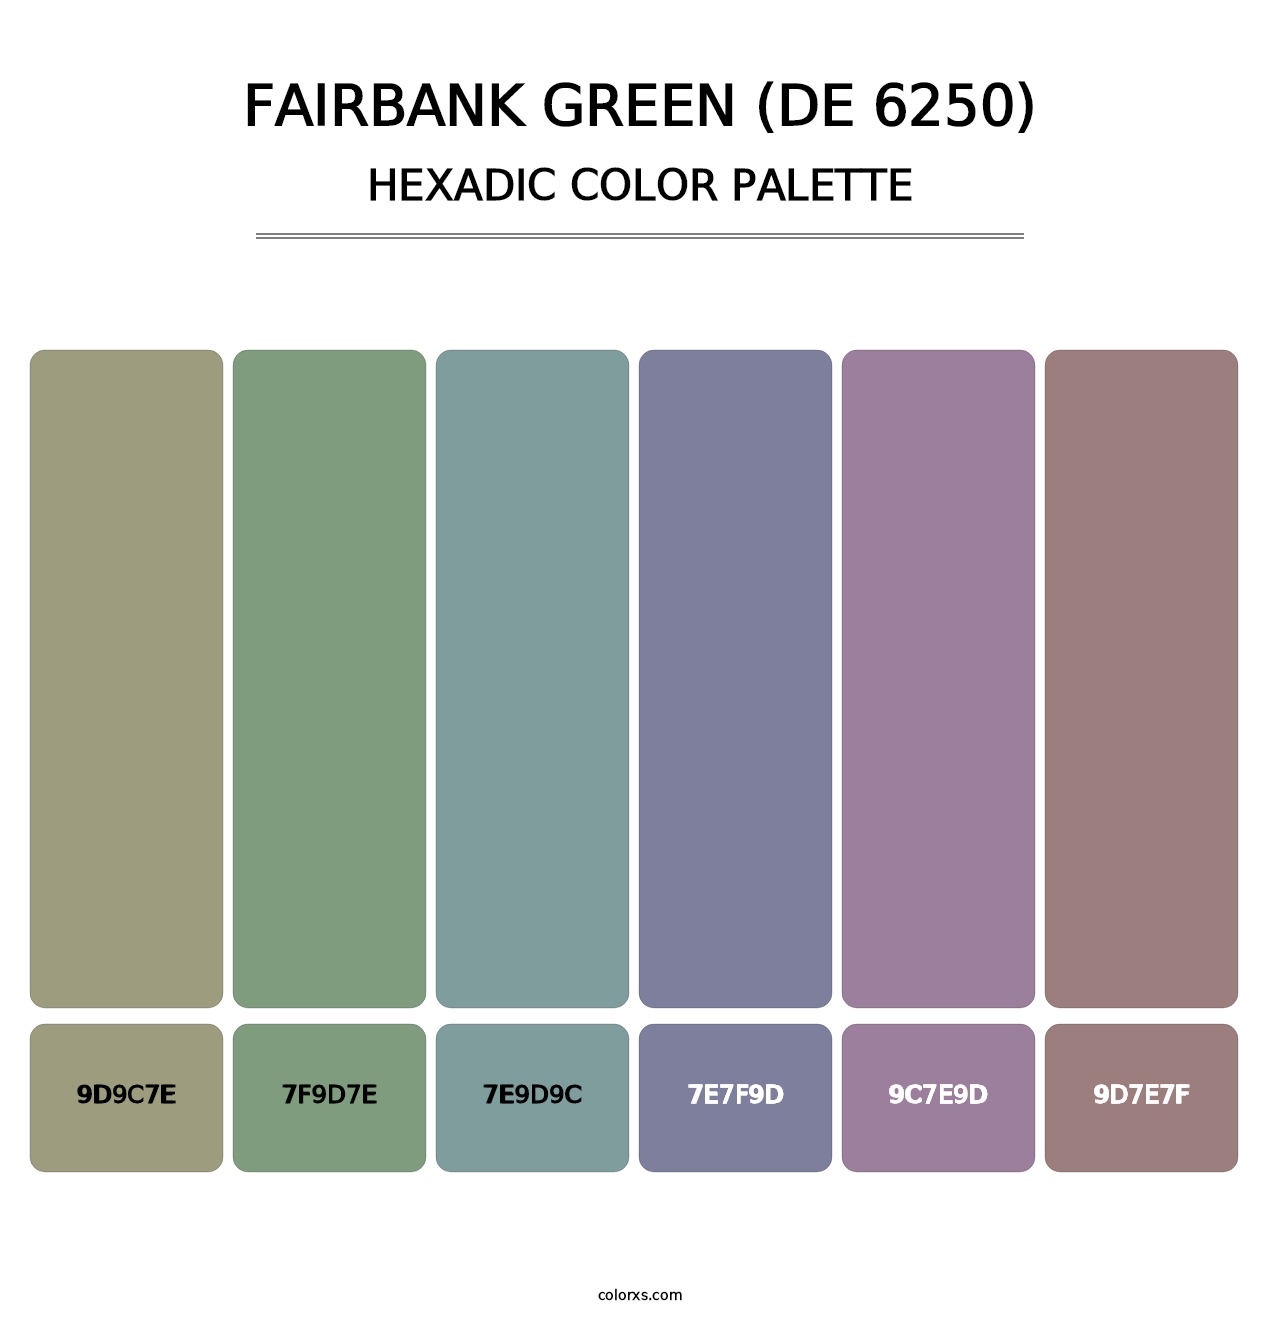 Fairbank Green (DE 6250) - Hexadic Color Palette